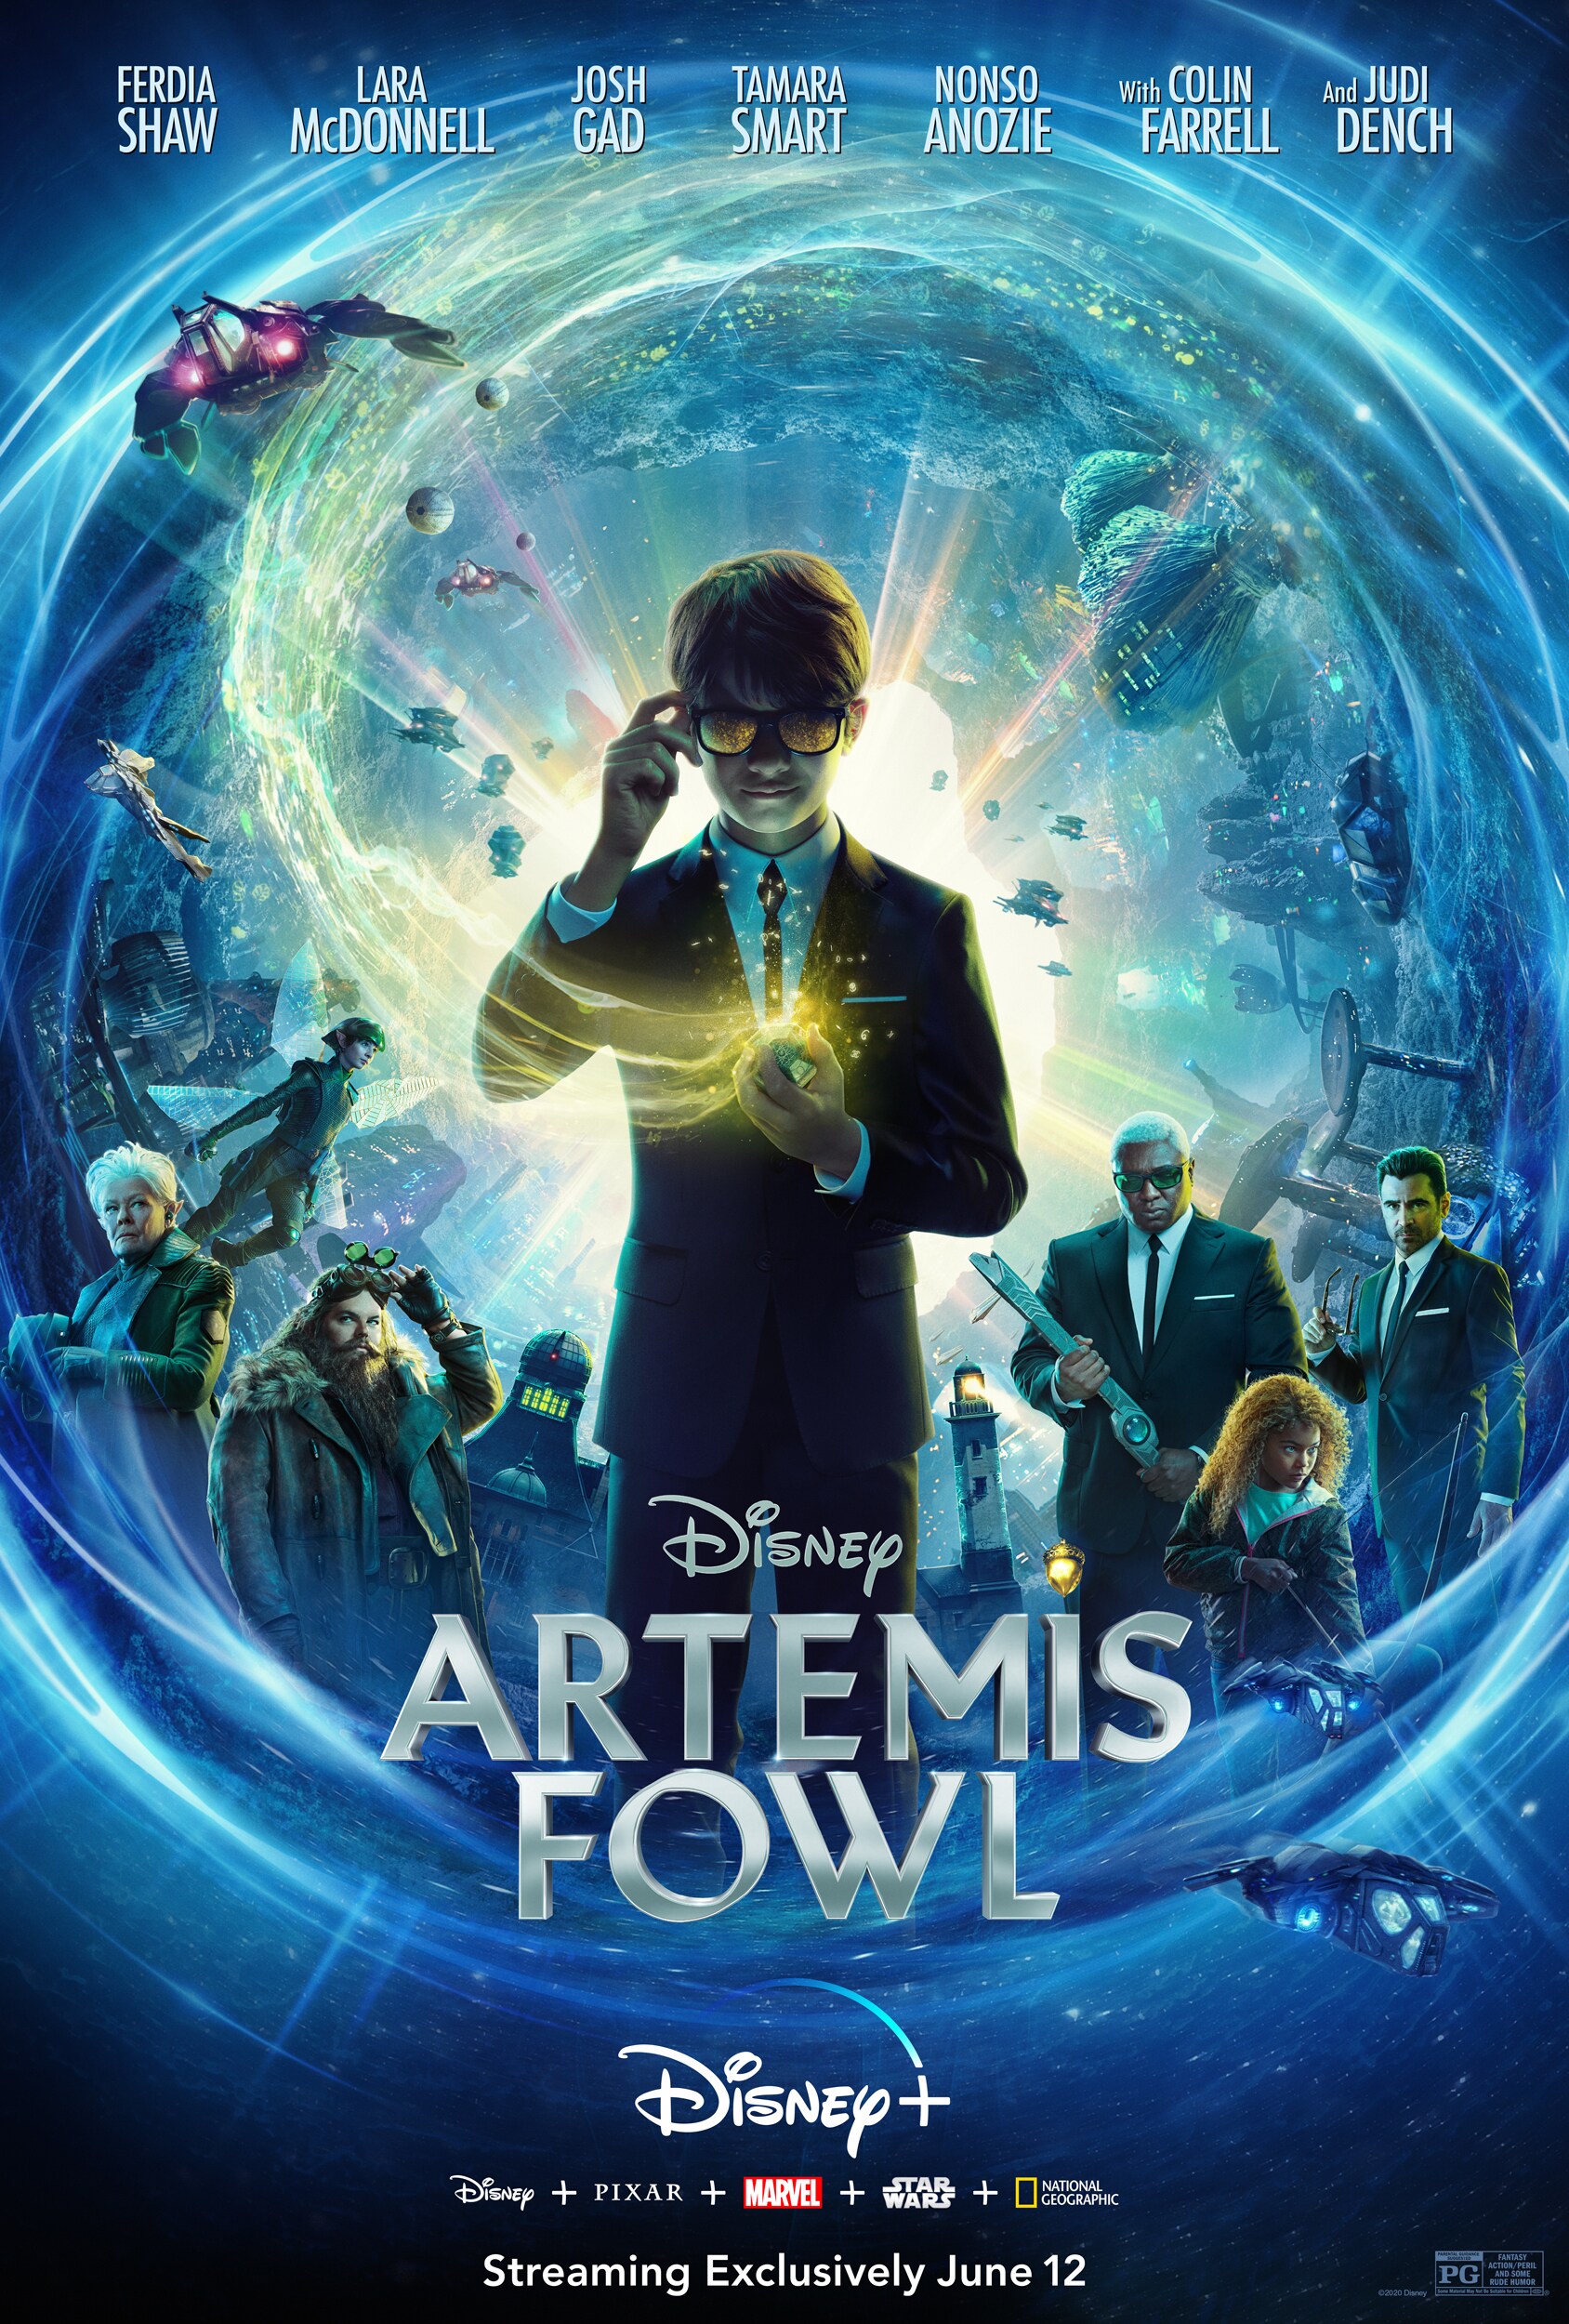 Artemis Fowl: Where to Watch & Stream Online